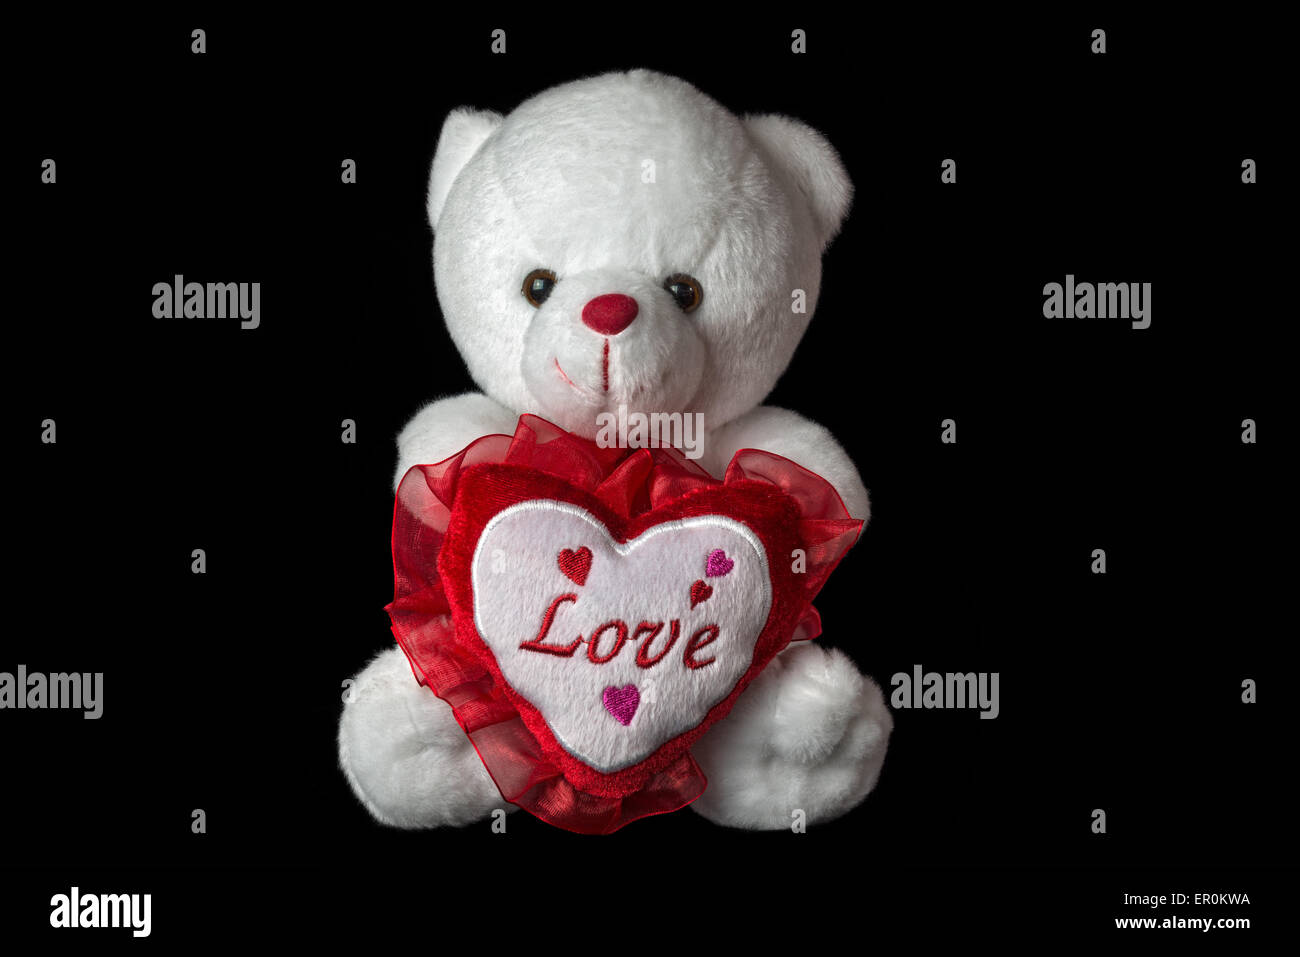 White teddy bear isolated on black background. Stock Photo